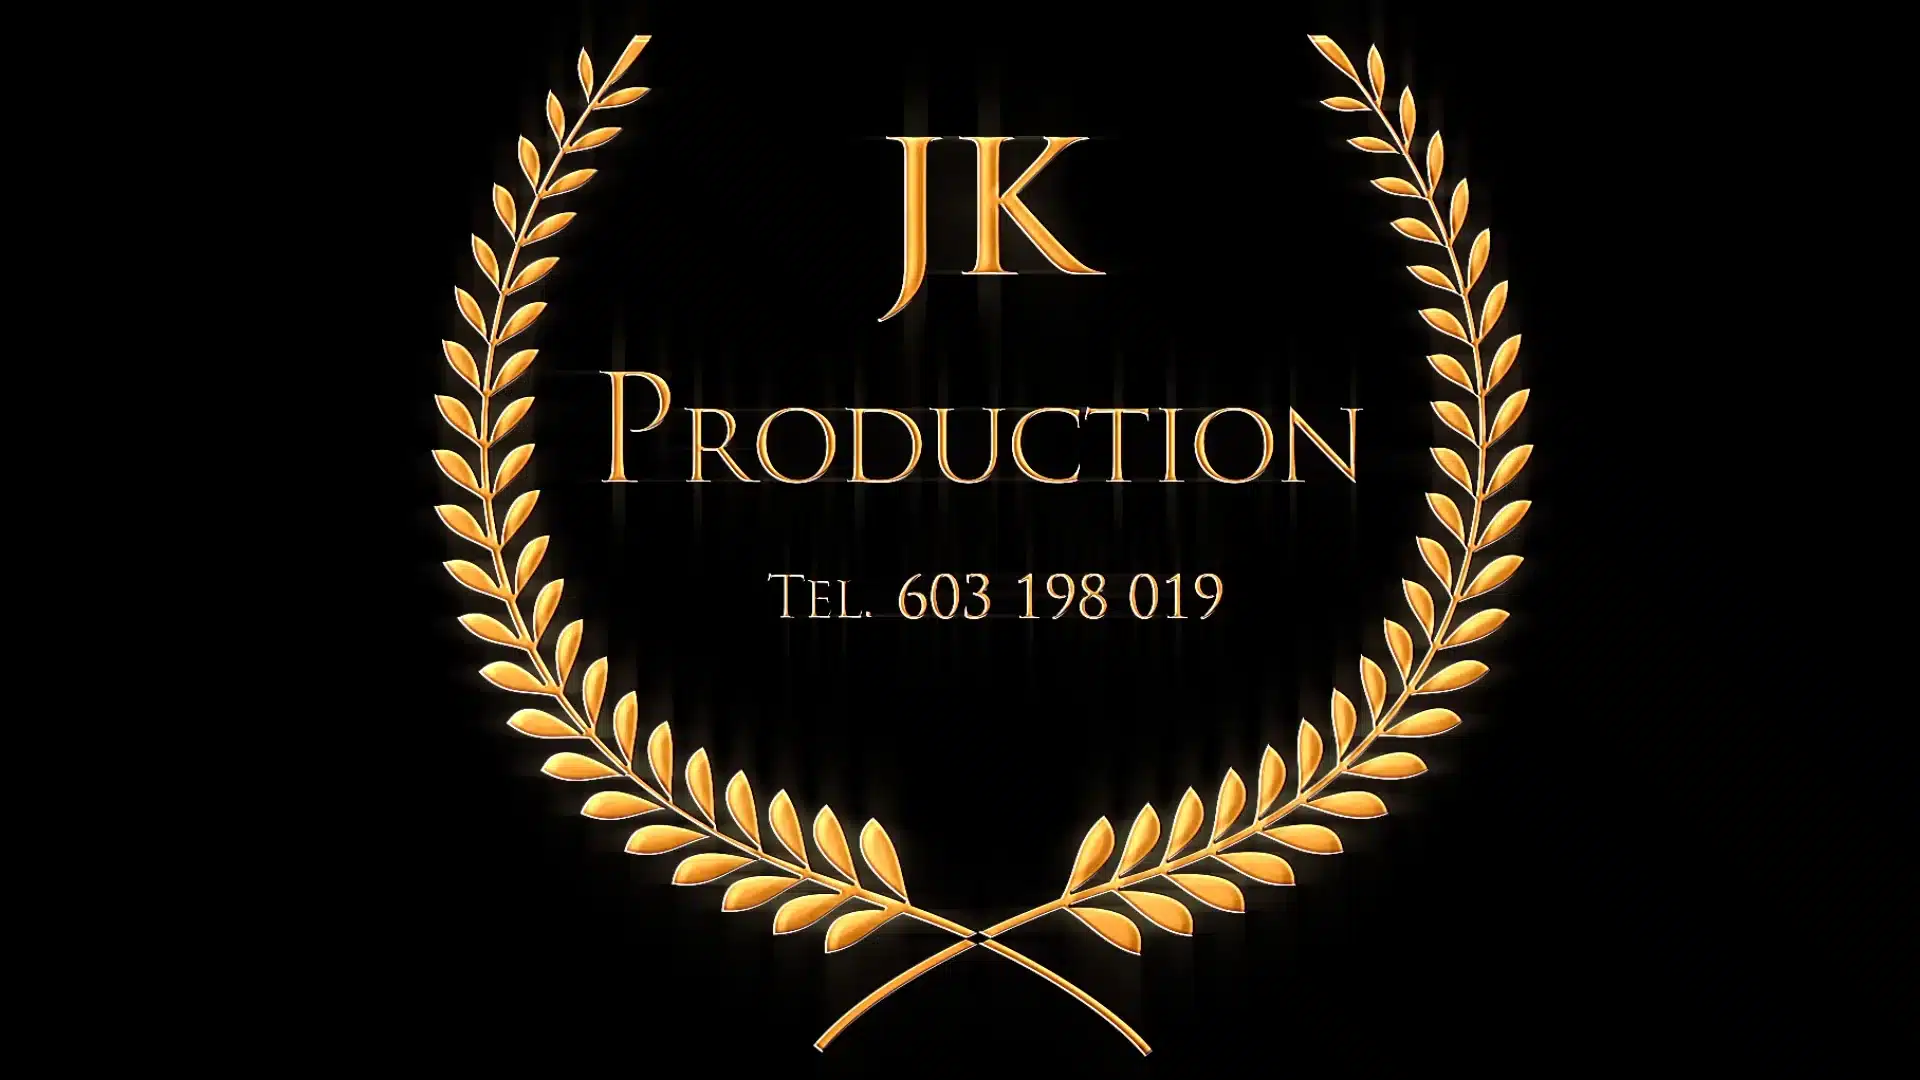 JK Production kaszlik warszawa logo